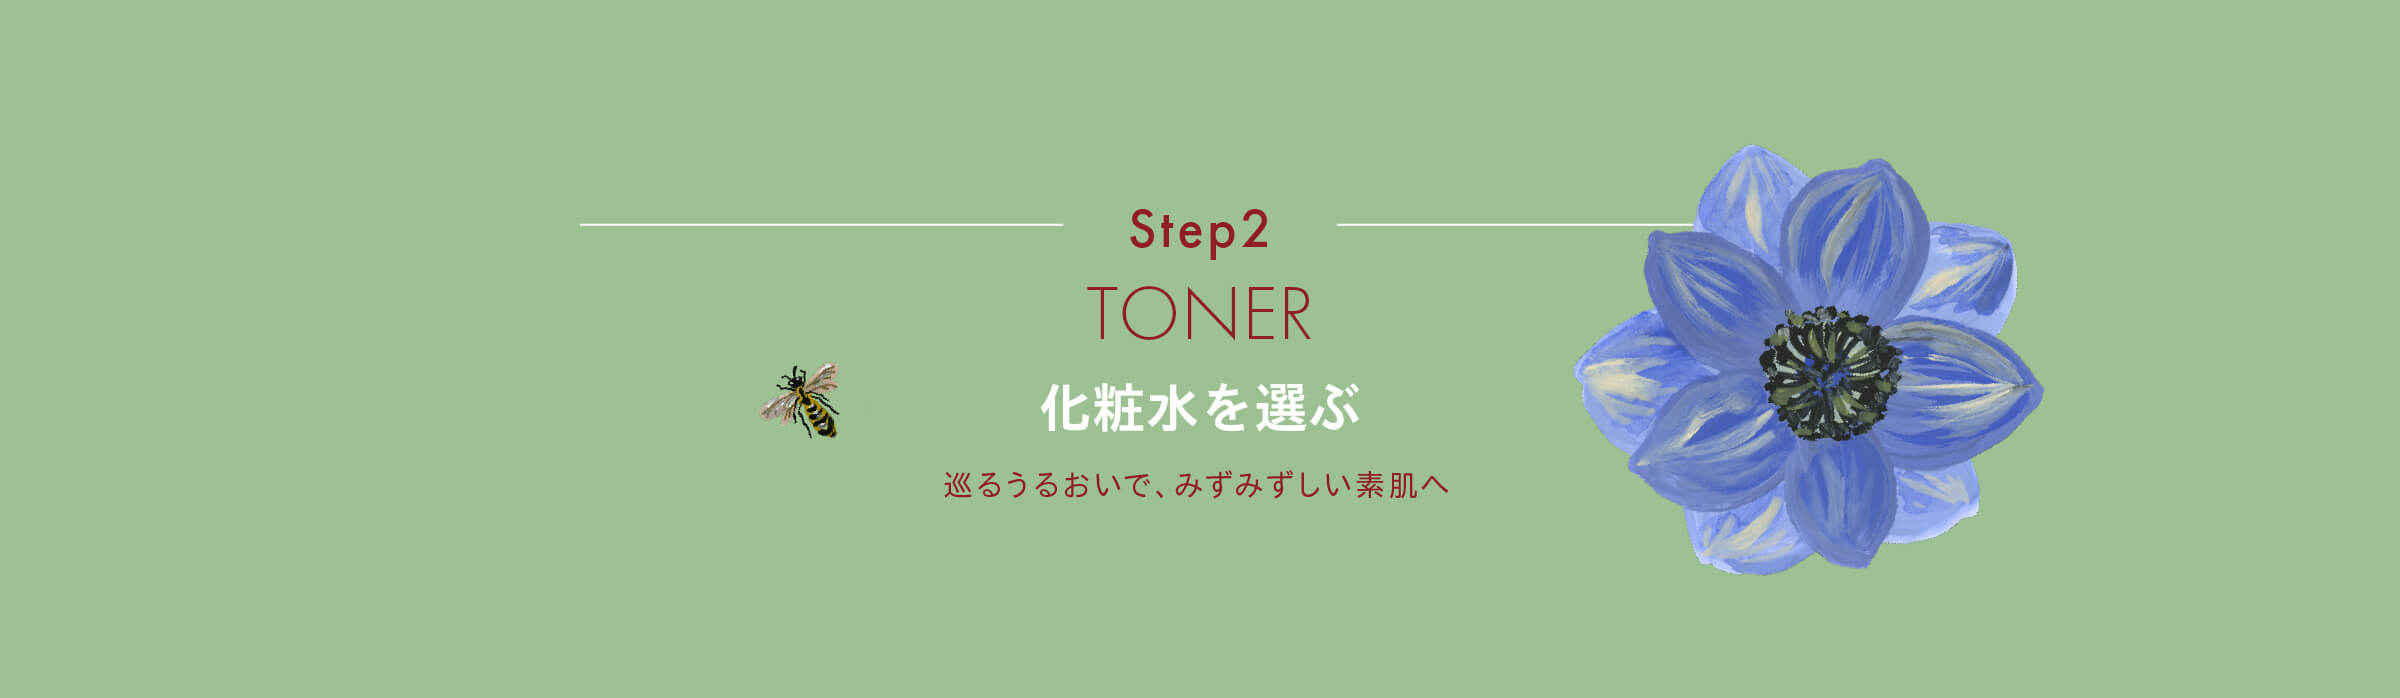 Step2 TONER